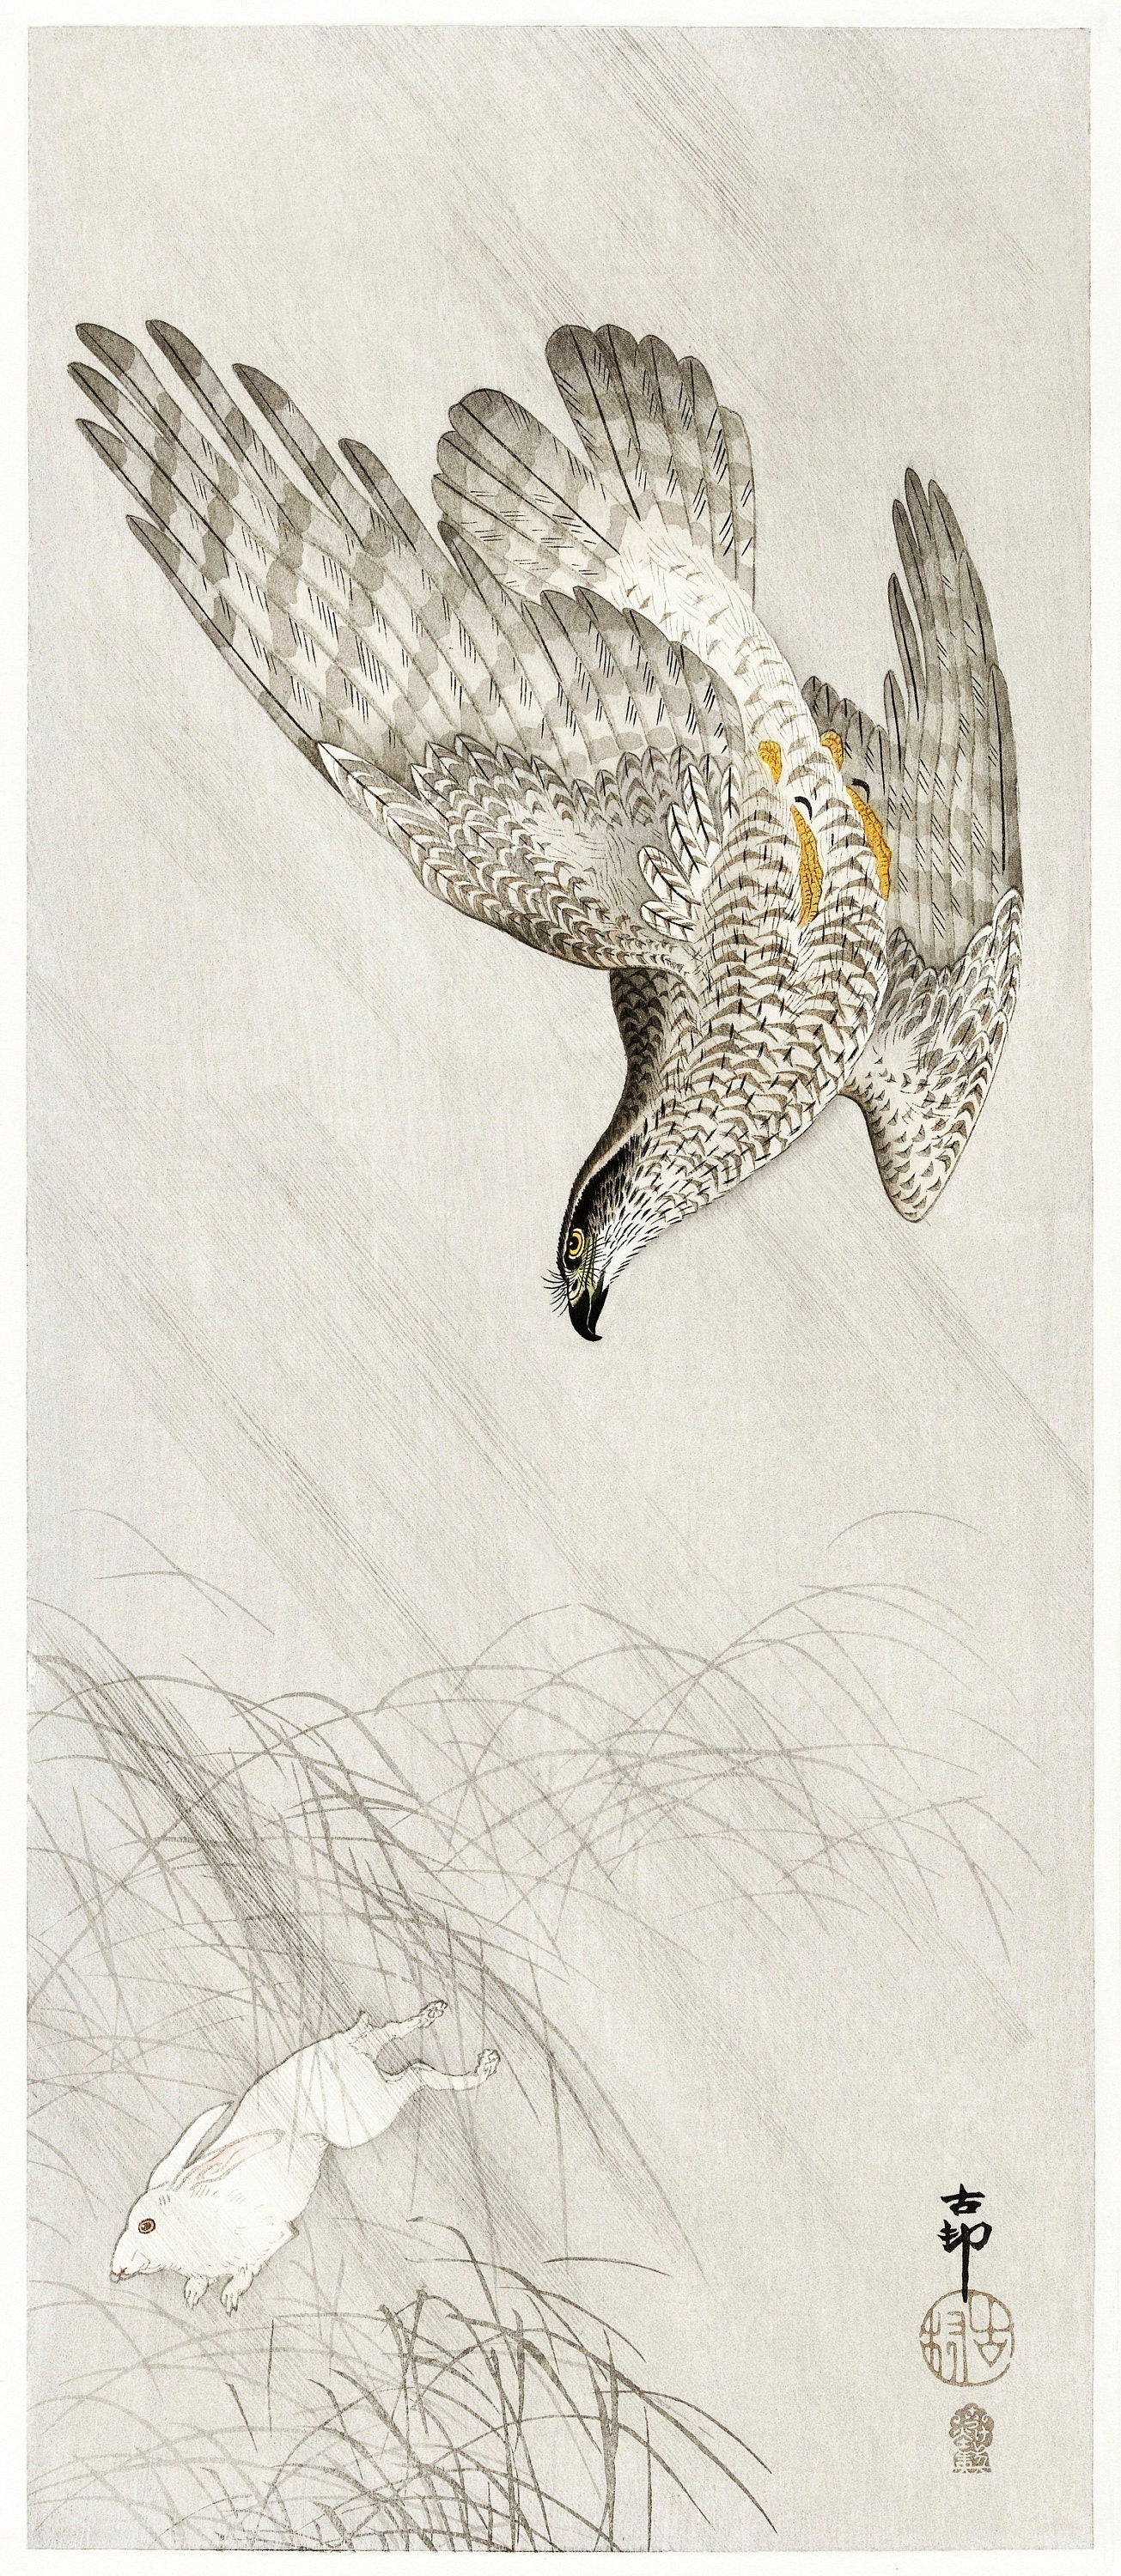 Ohara Koson Shin-Hanga Woodblock Prints Set 1 [39 Images]